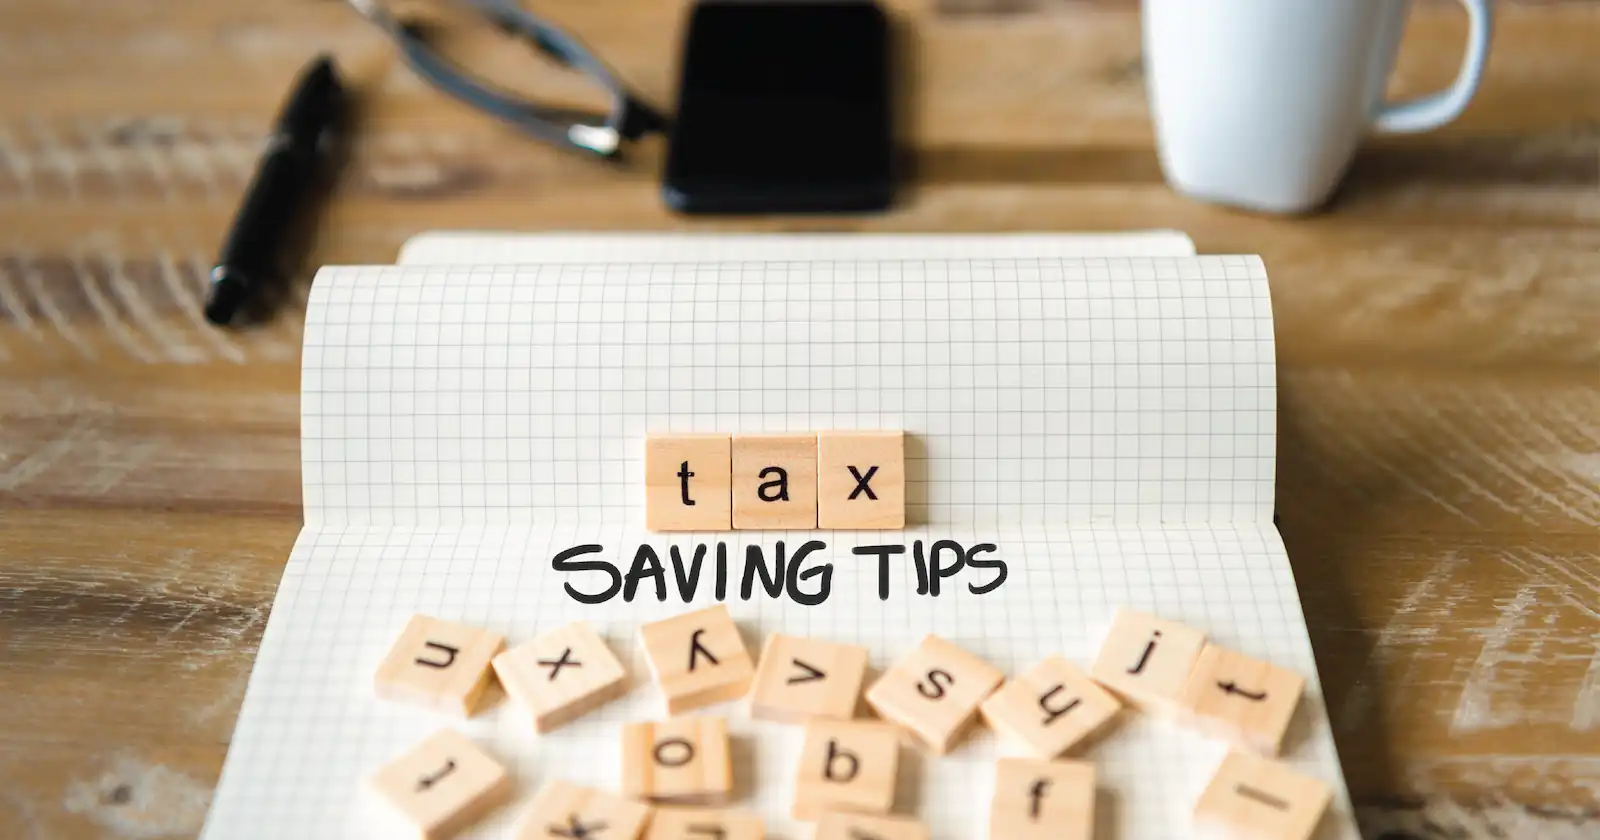 Tax Hacks - 21 Tax Saving Tips to reduce your tax burden